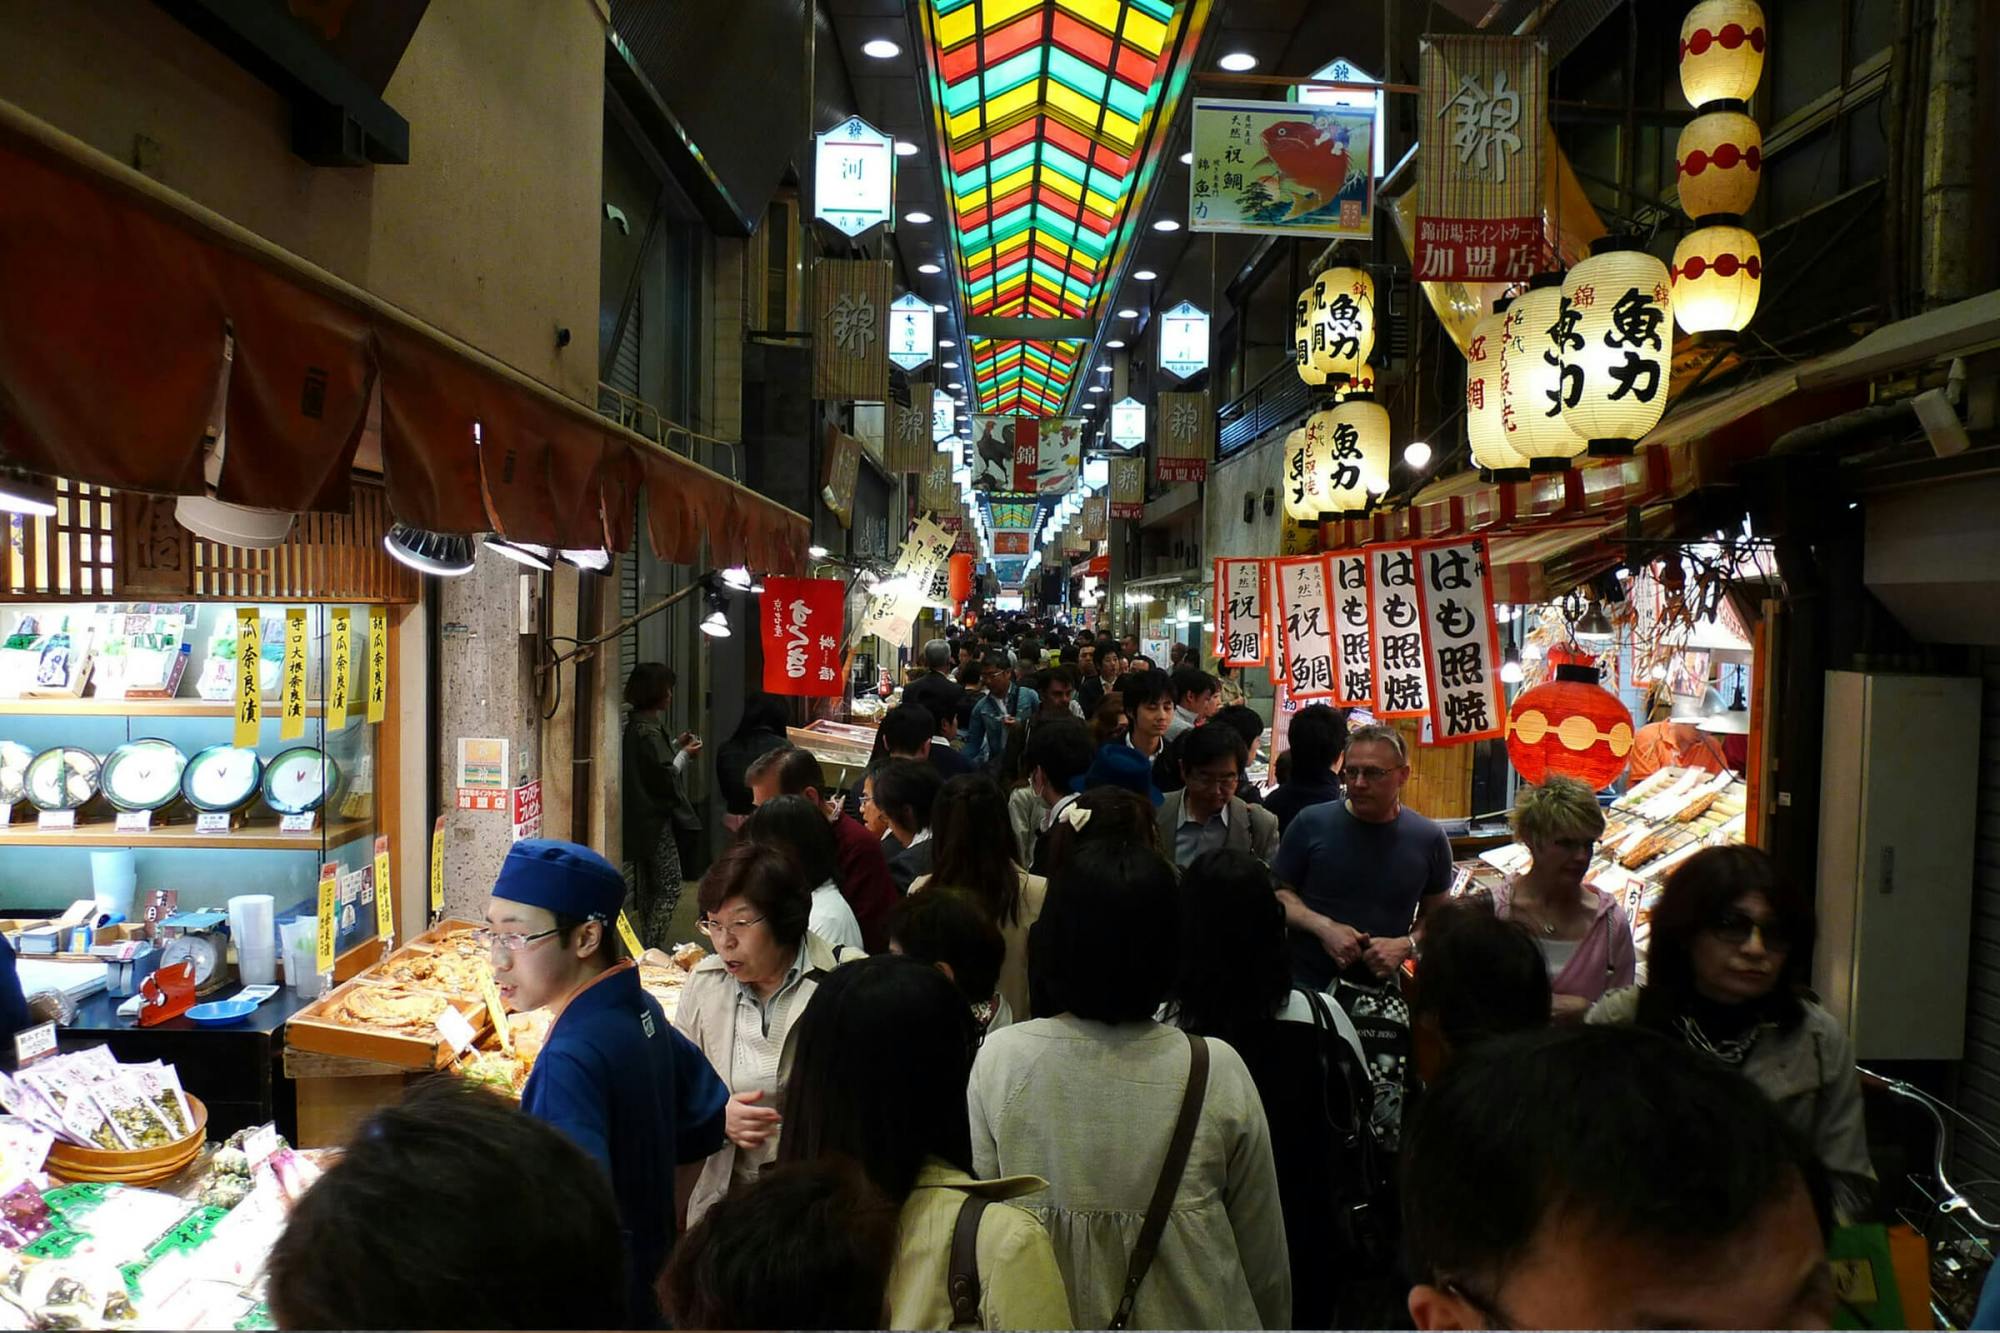 Foodtour op de Kyoto Nishiki-markt